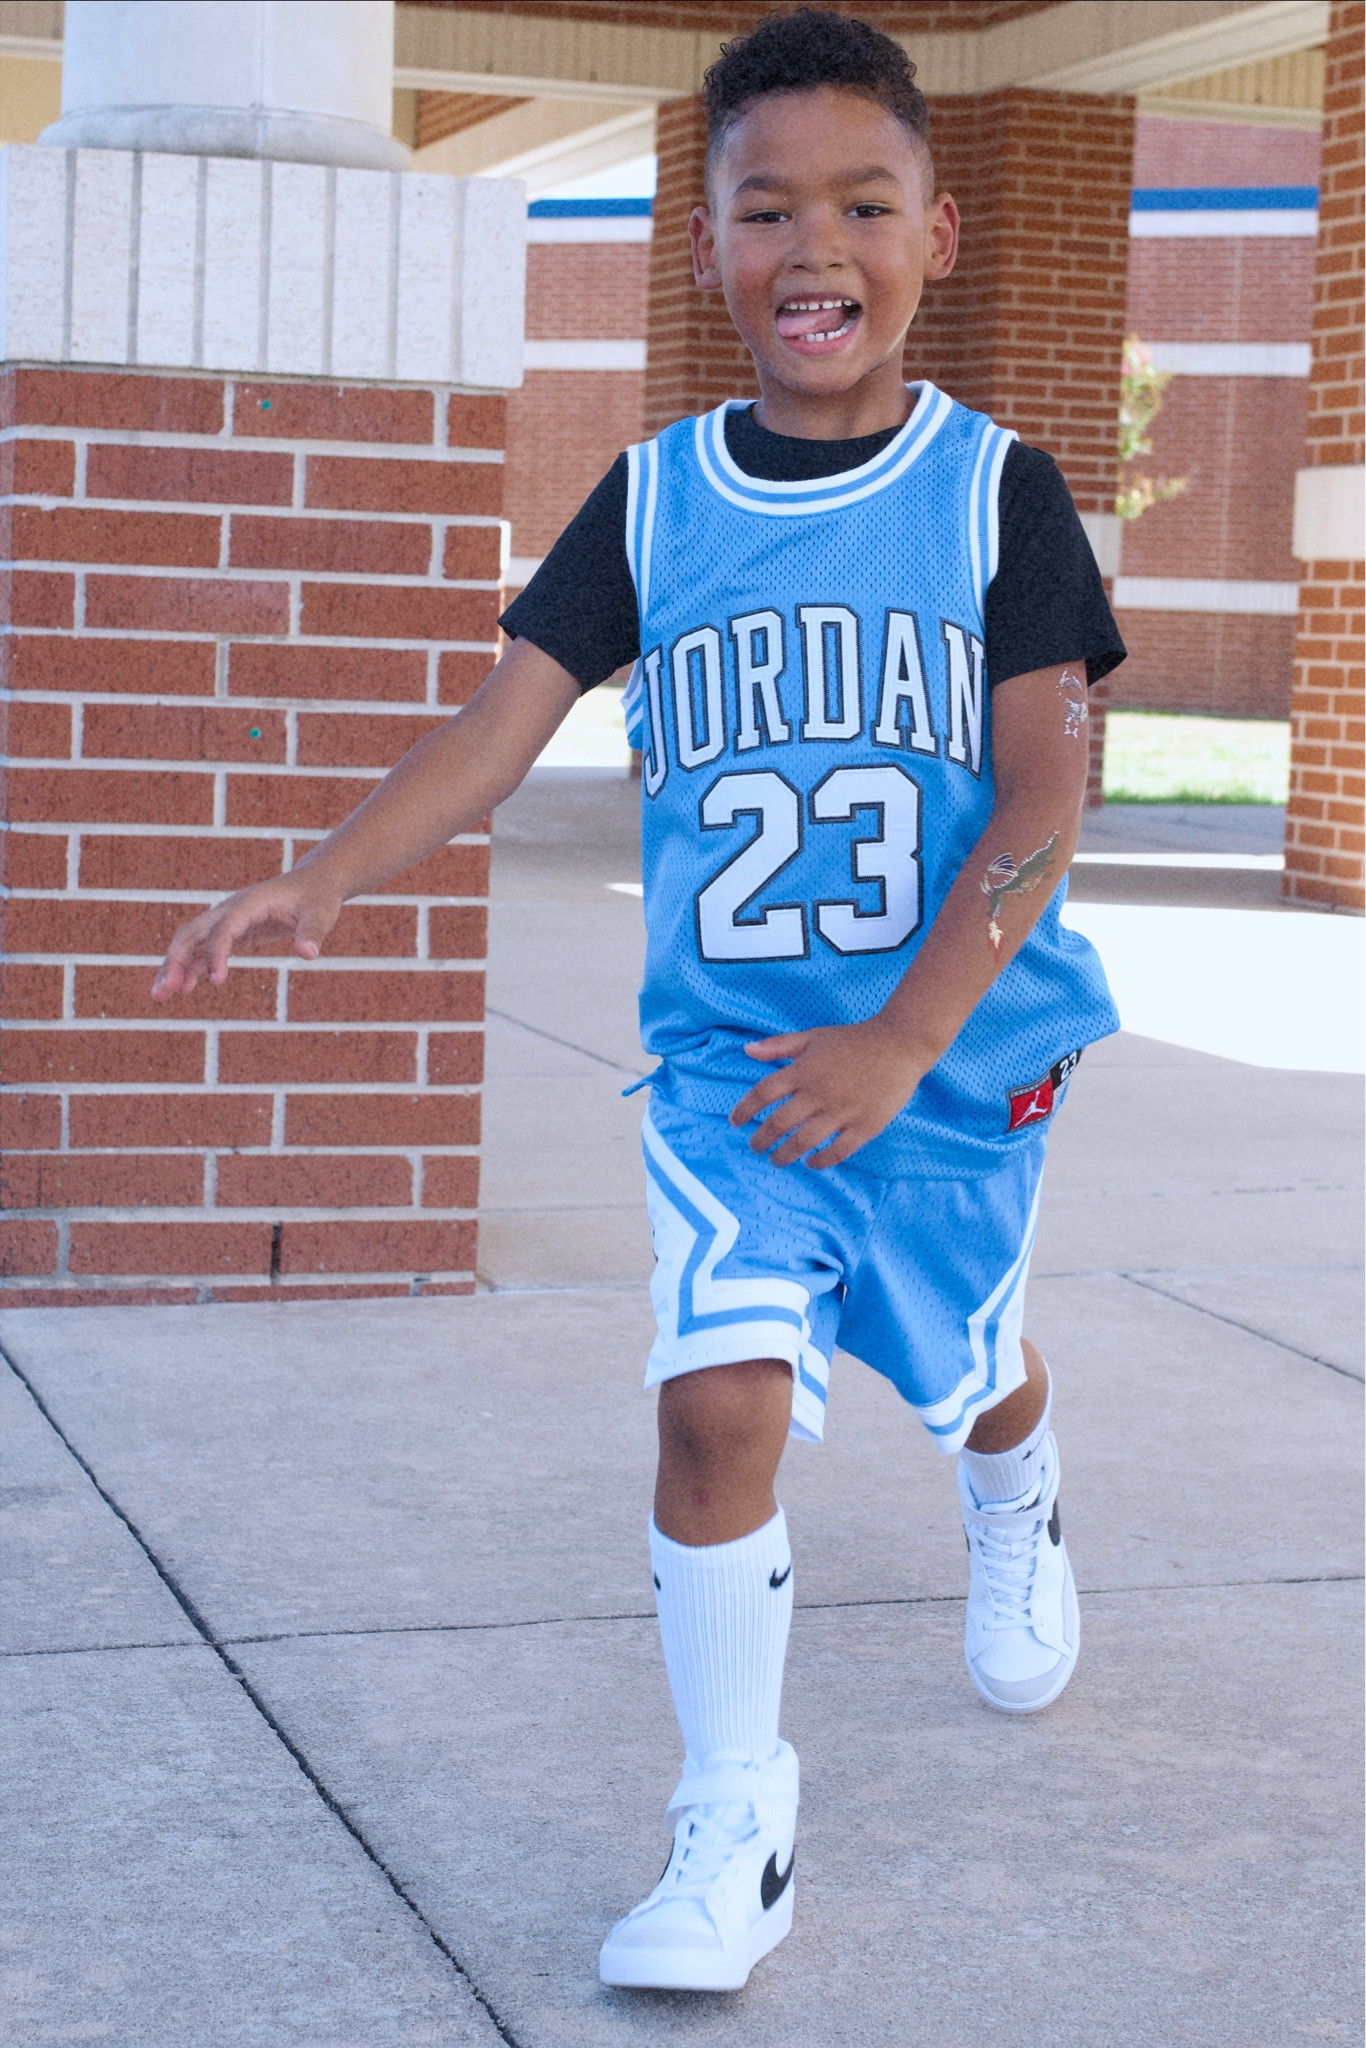 Jordan Boys' 23 Jersey curated on LTK